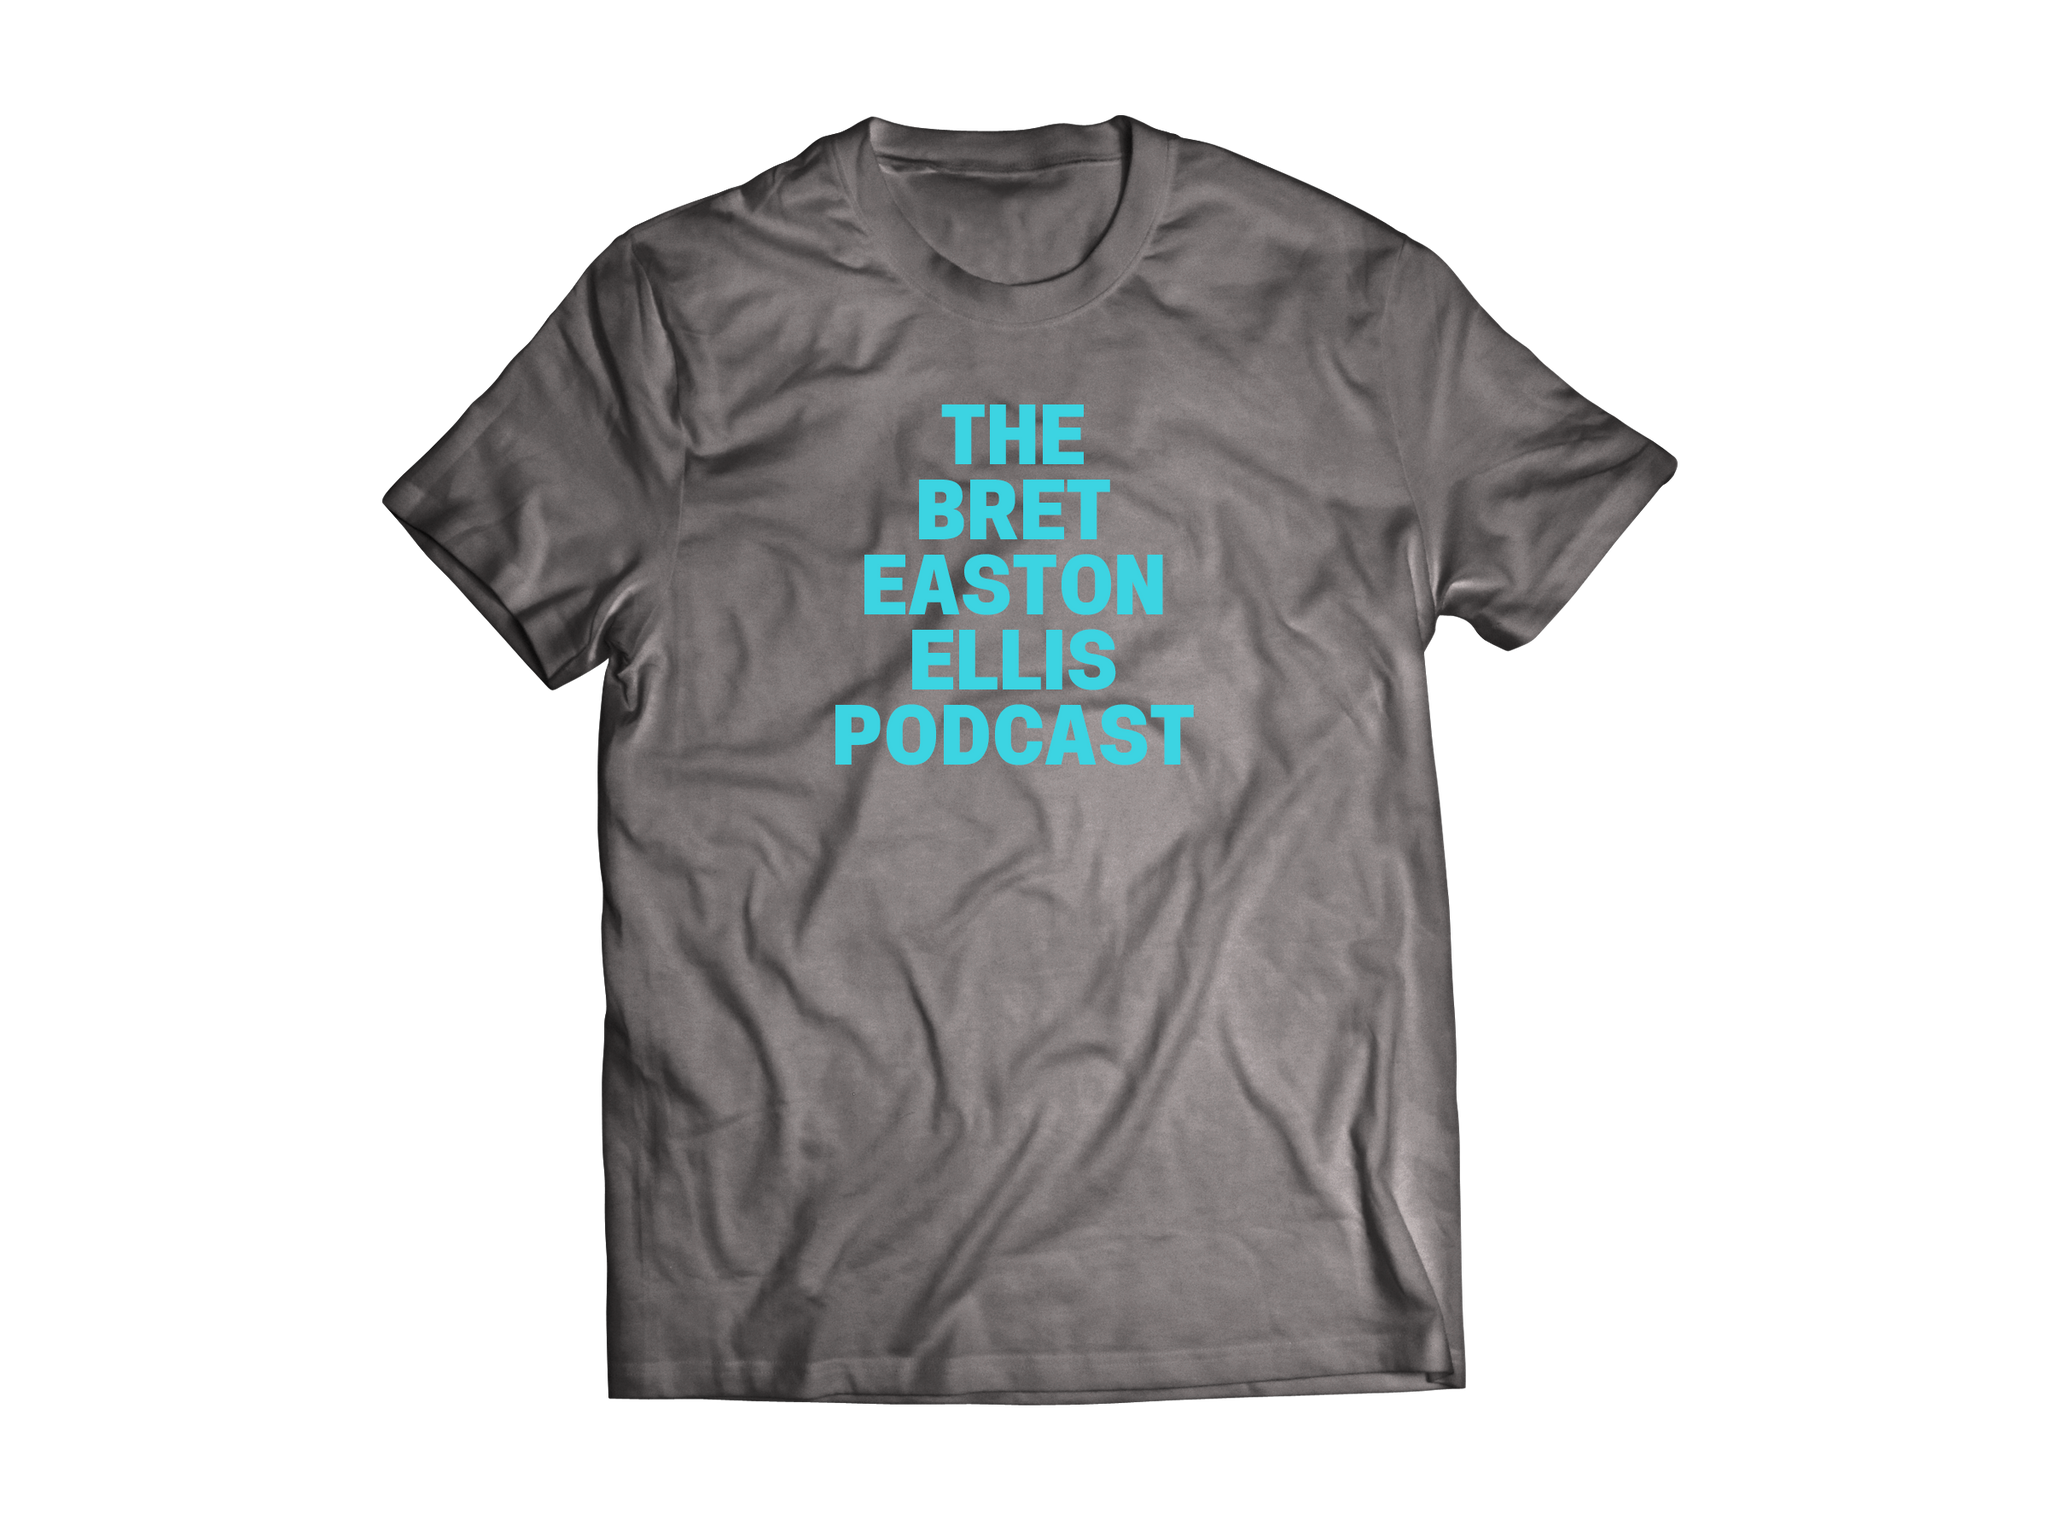 "THE BRET EASTON ELLIS PODCAST" GREY T-SHIRT